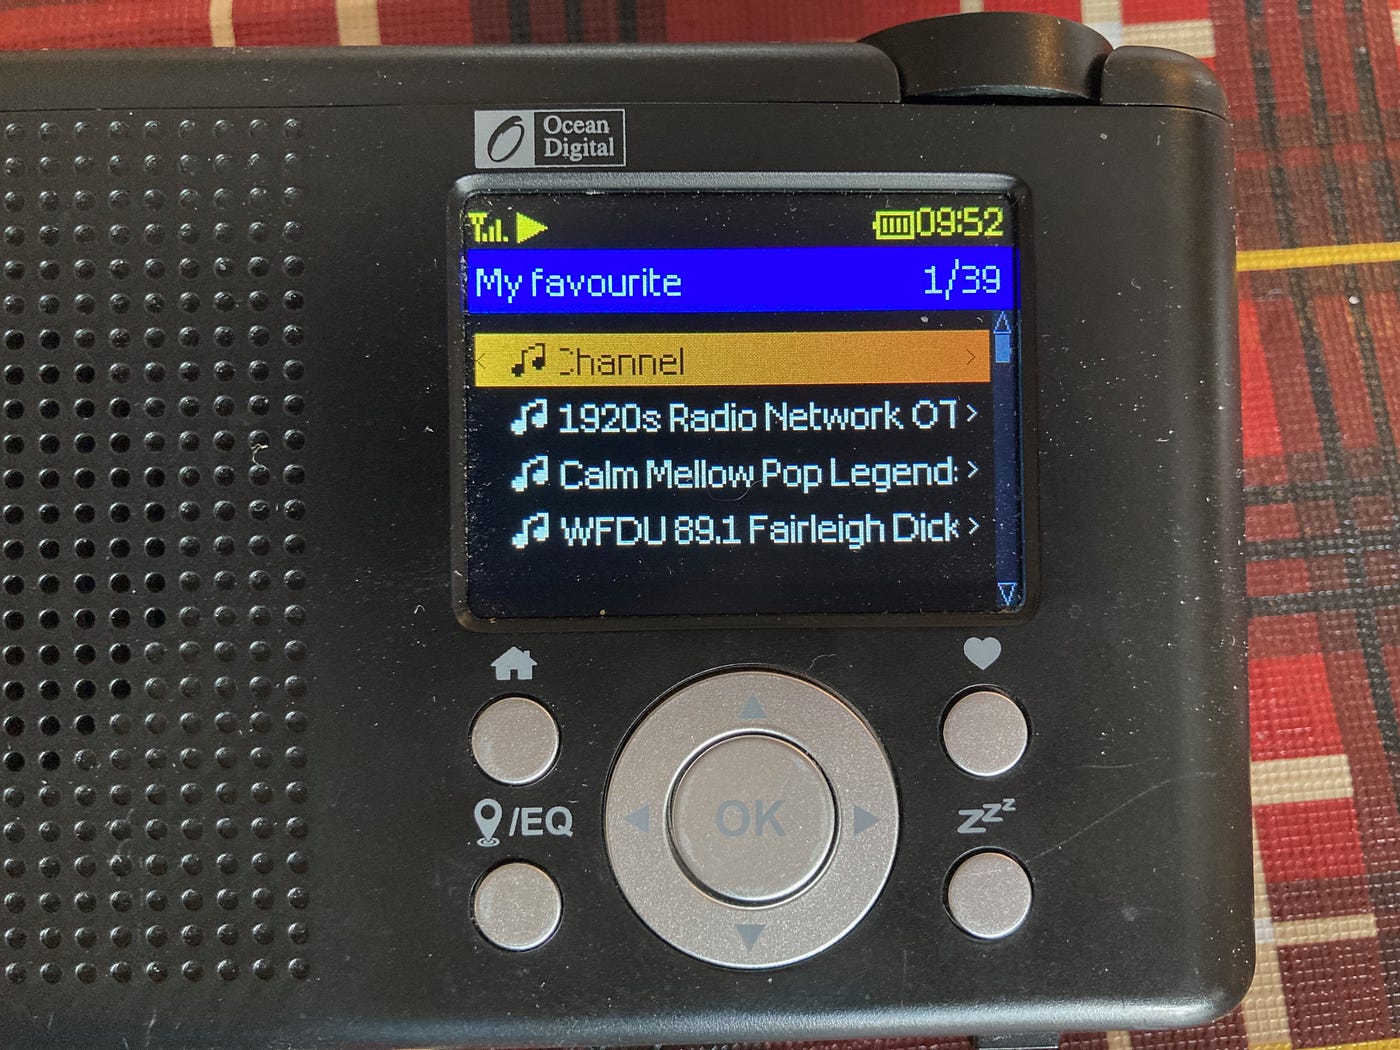  Ocean Digital WR-23F Portable FM Internet Radio 2.4” Color LCD  Built-in Battery Wi-Fi Bluetooth (Black) : Electronics